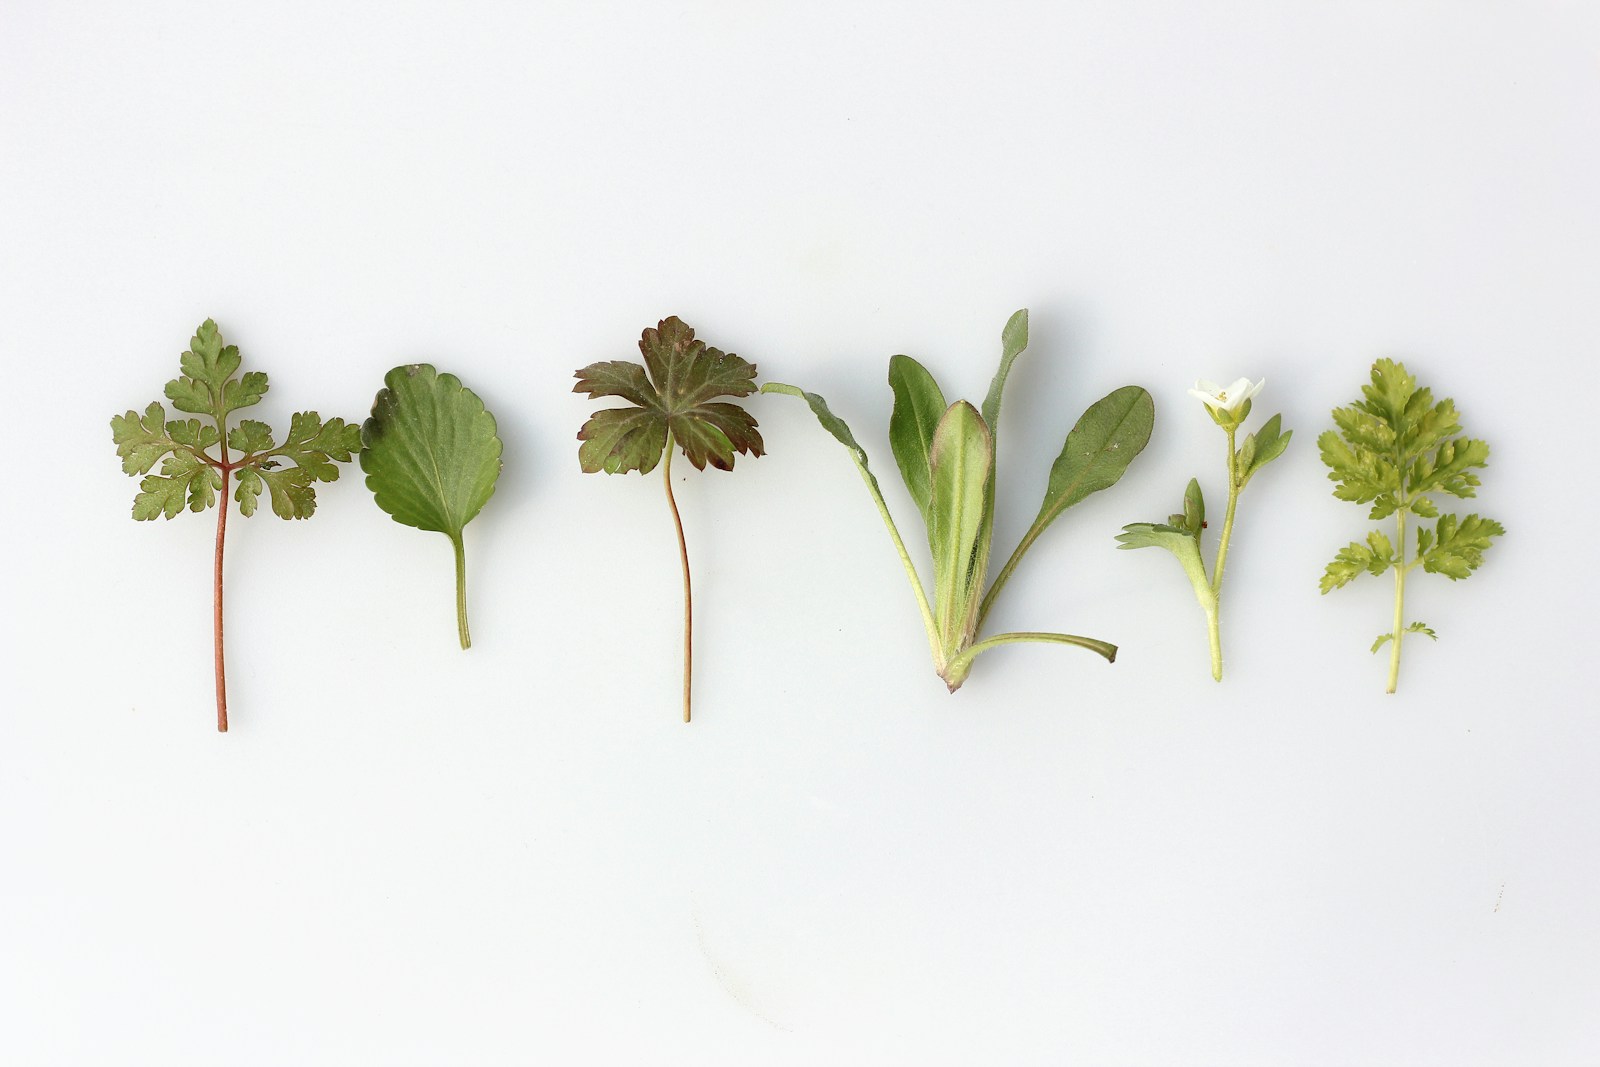 Herbal Almanac: Edible & Medicinal Benefits, Plus Cultivation Tips